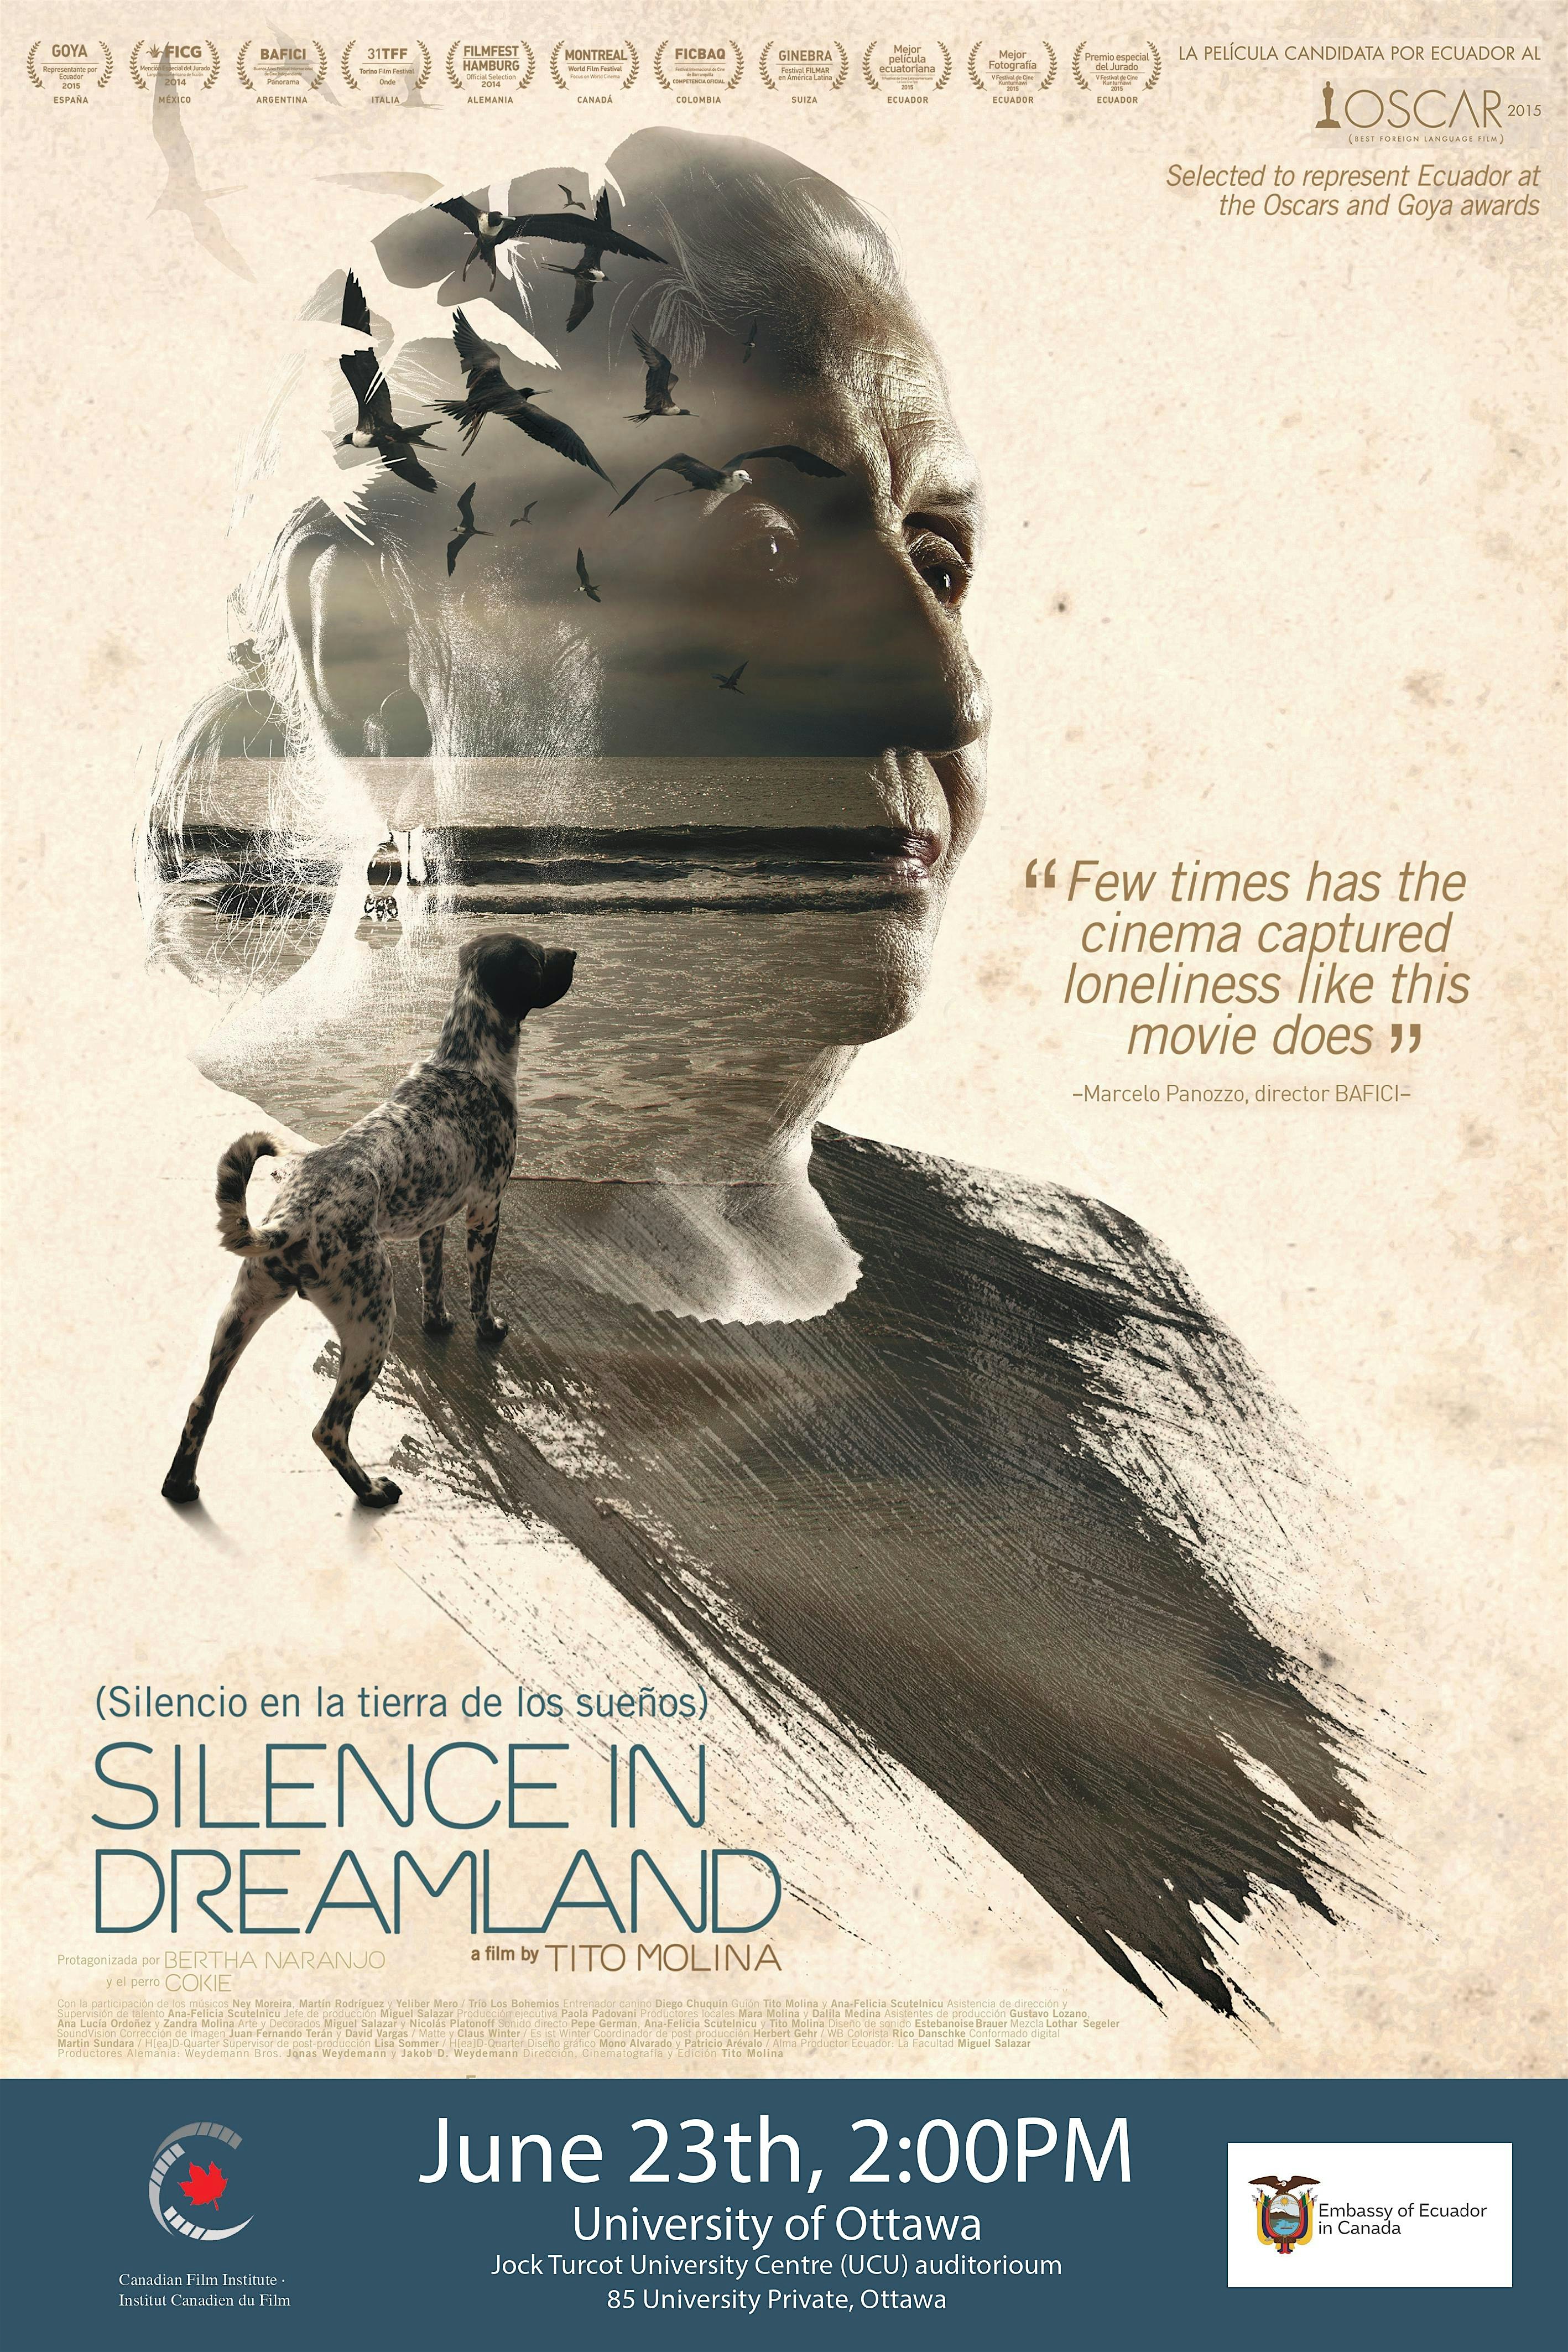 Ecuador \u00b4 s movie screening: "Silence in Dreamland" by Tito Molina